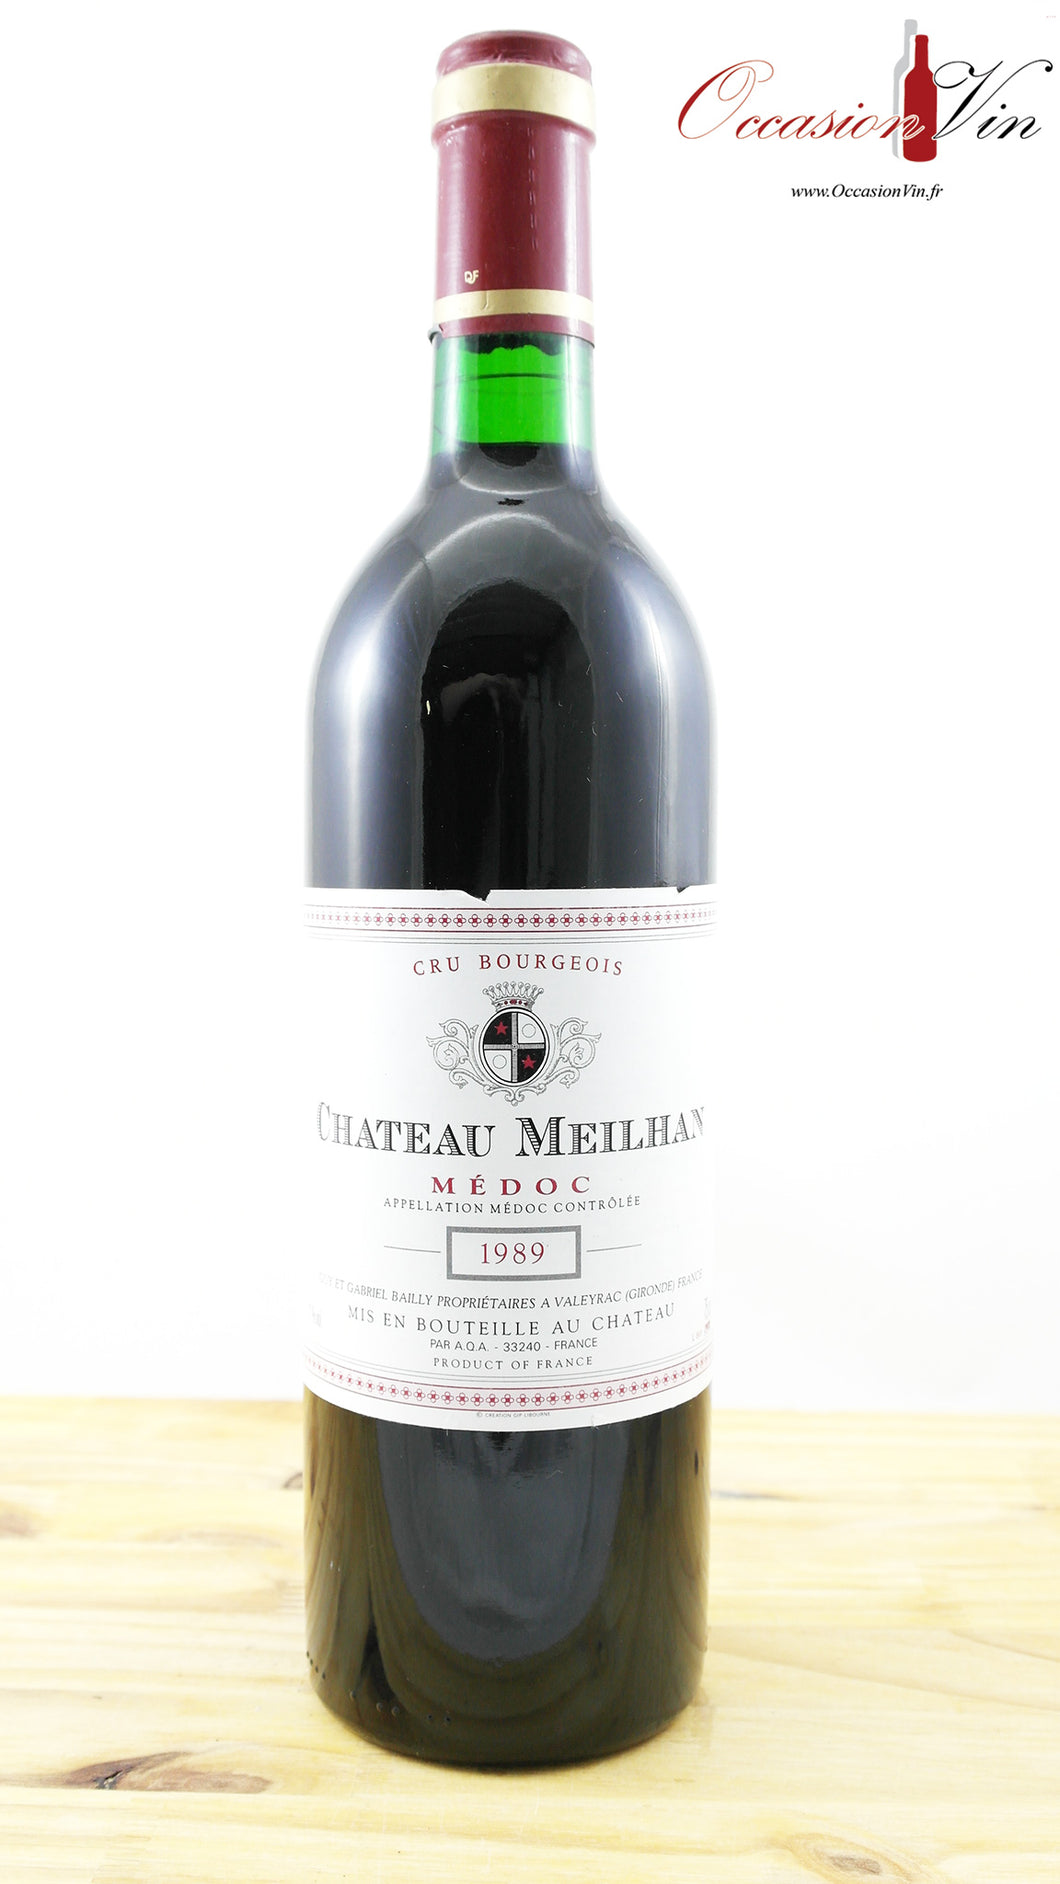 Château Meilhan HE Vin 1989